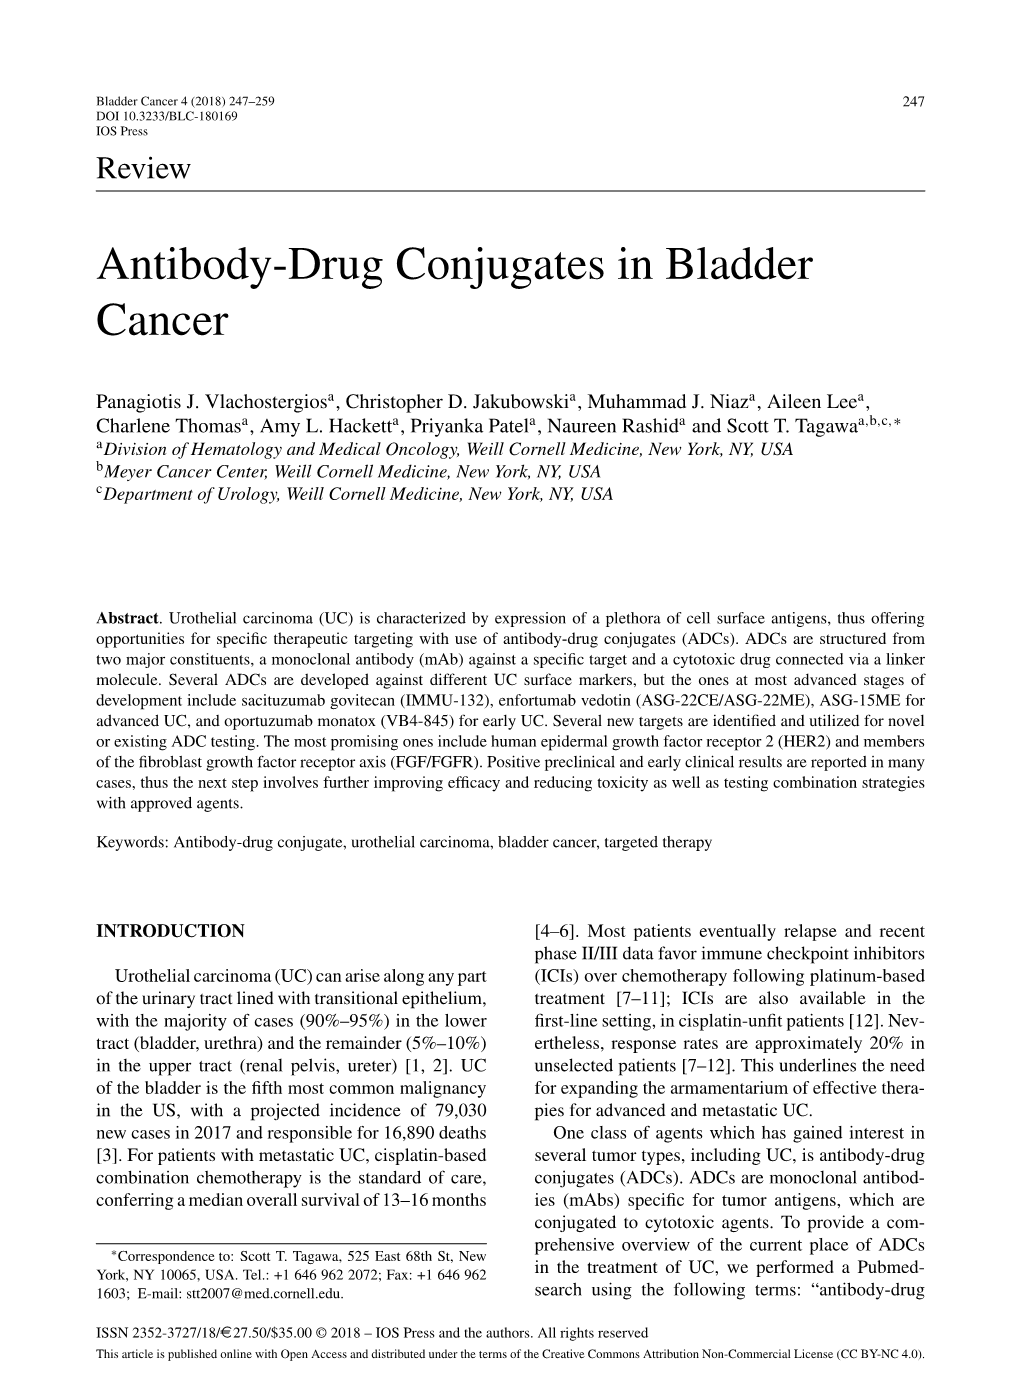 Antibody-Drug Conjugates in Bladder Cancer